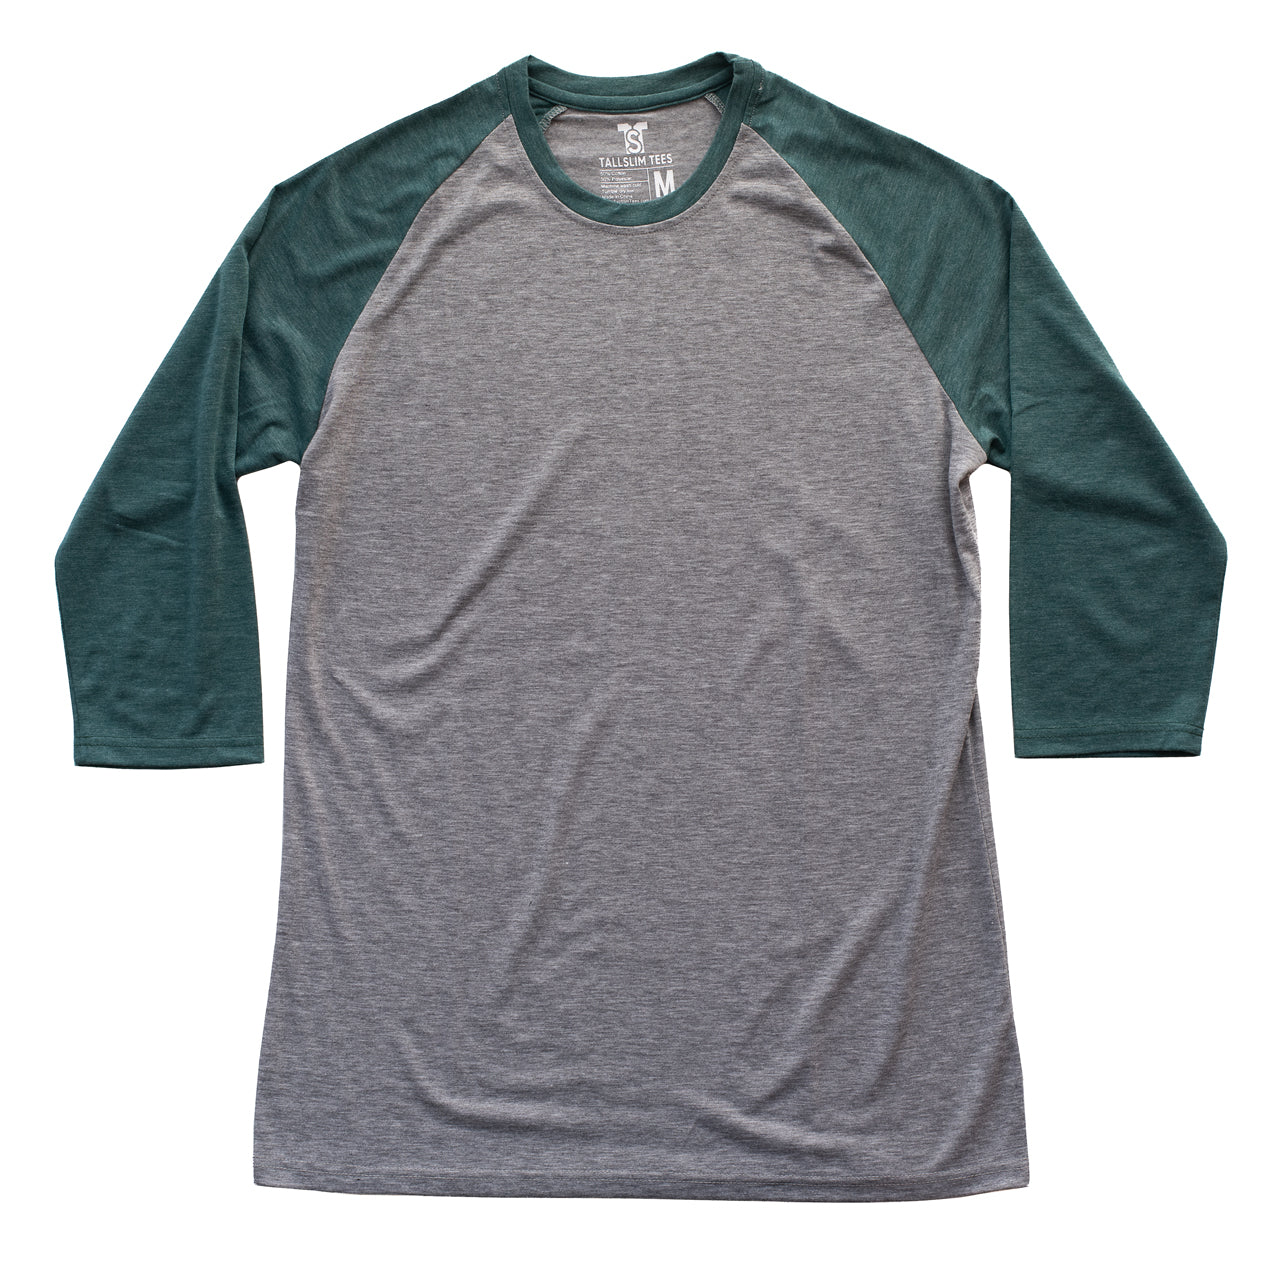 3/4 sleeve raglan shirt - Ability Beyond